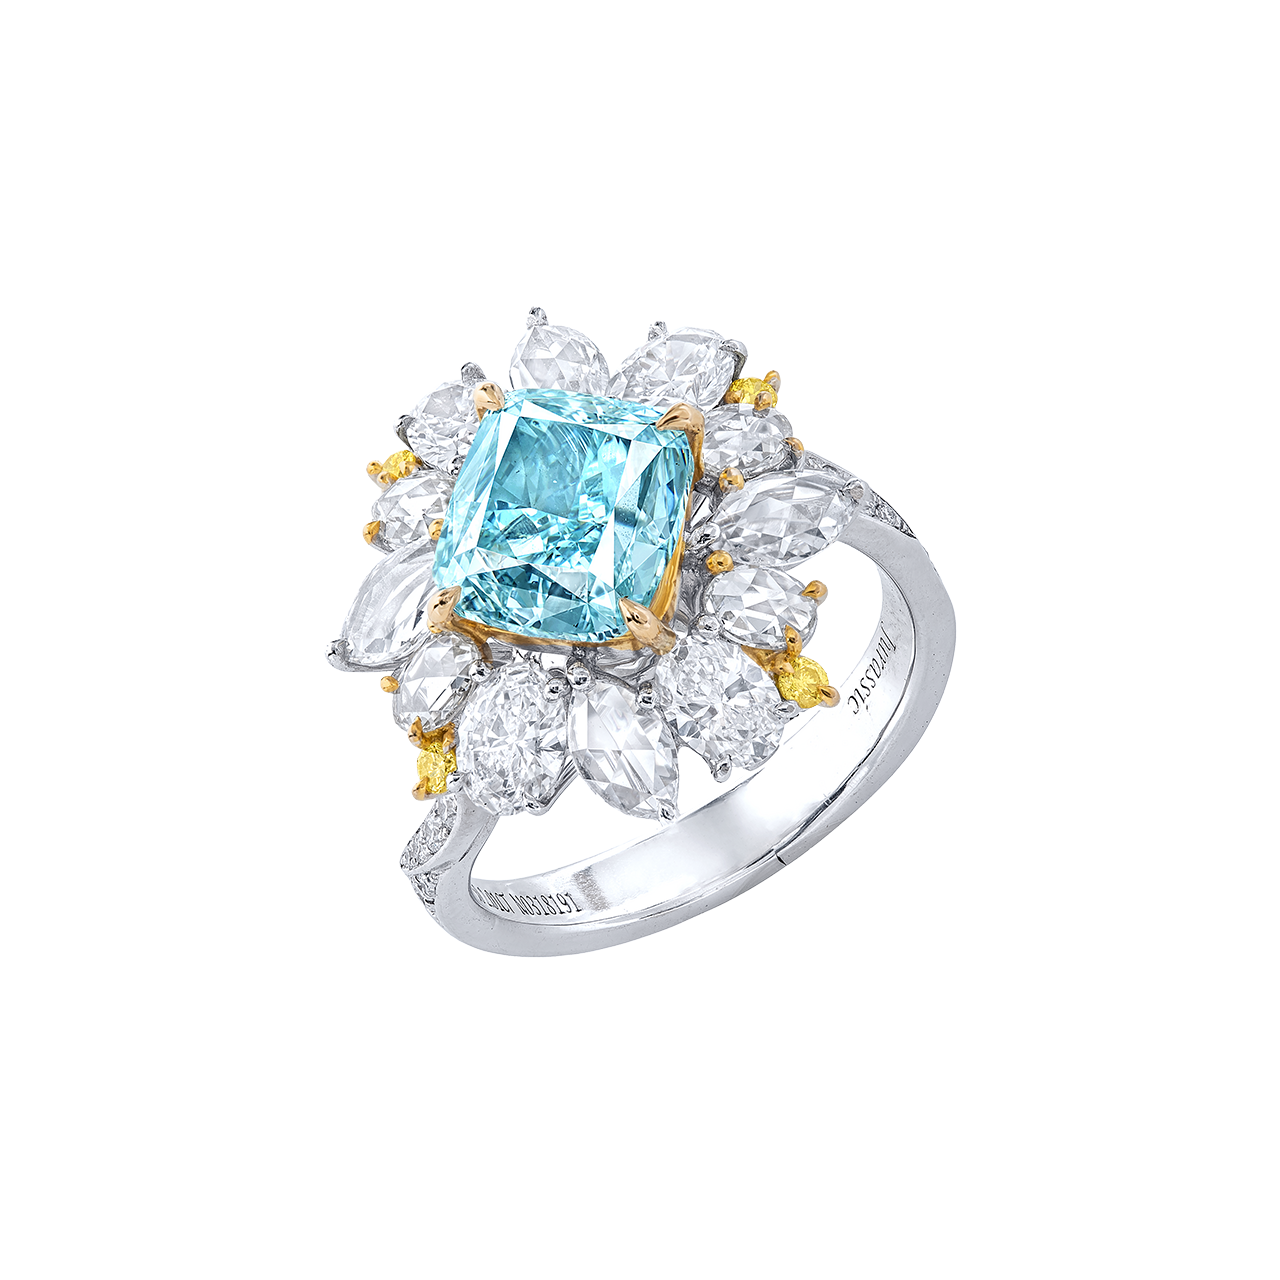 GIA 3.02克拉 綠藍彩鑽鑽戒
FANCY GREEN-BLUE DIAMOND
AND DIAMOND RING